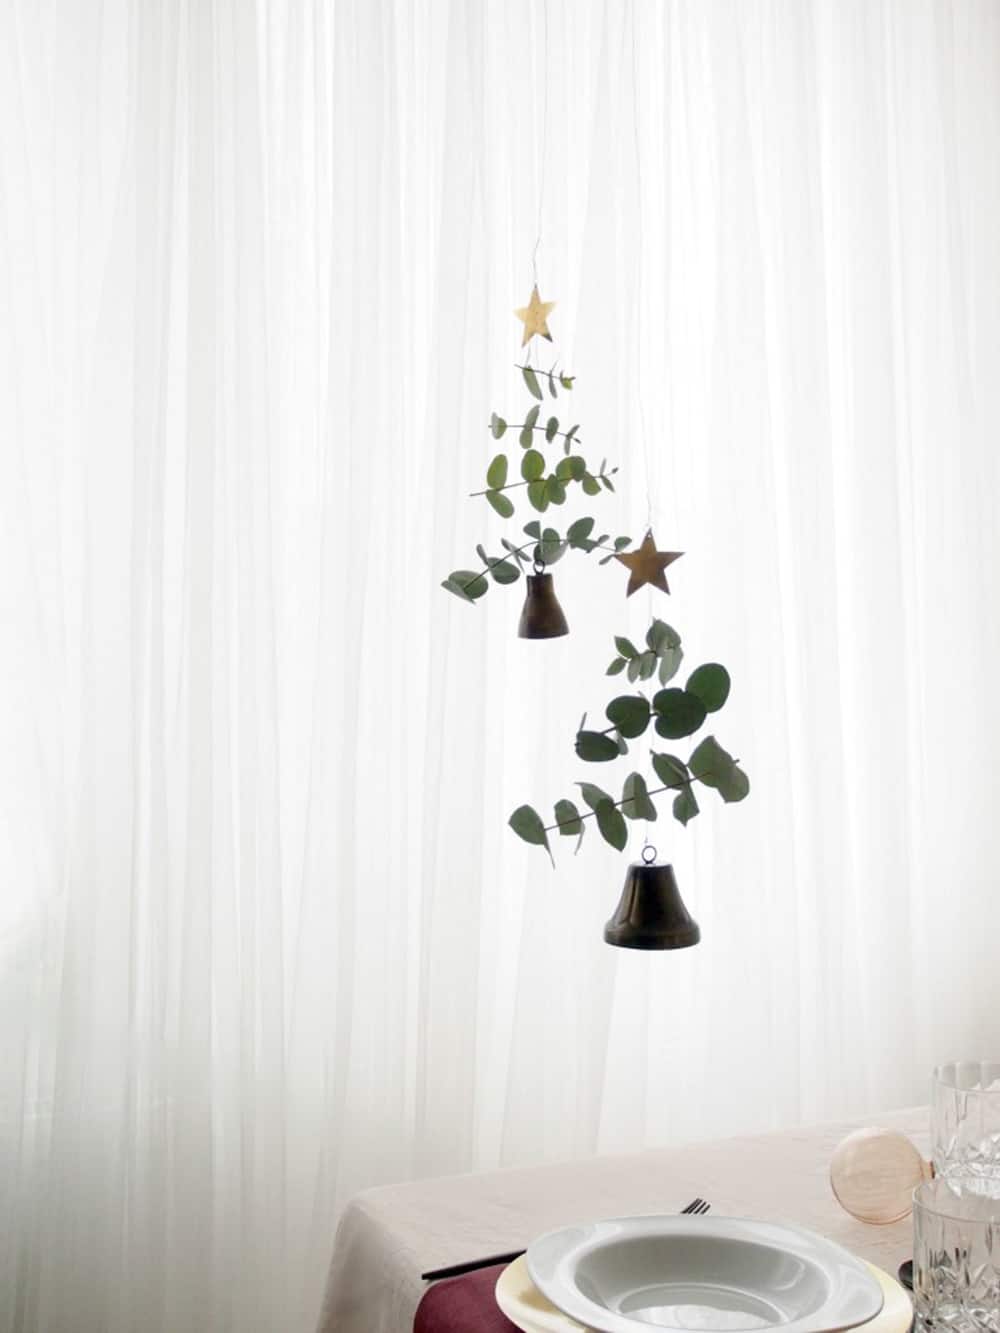 How to create a DIY scandinavian Christmas decor